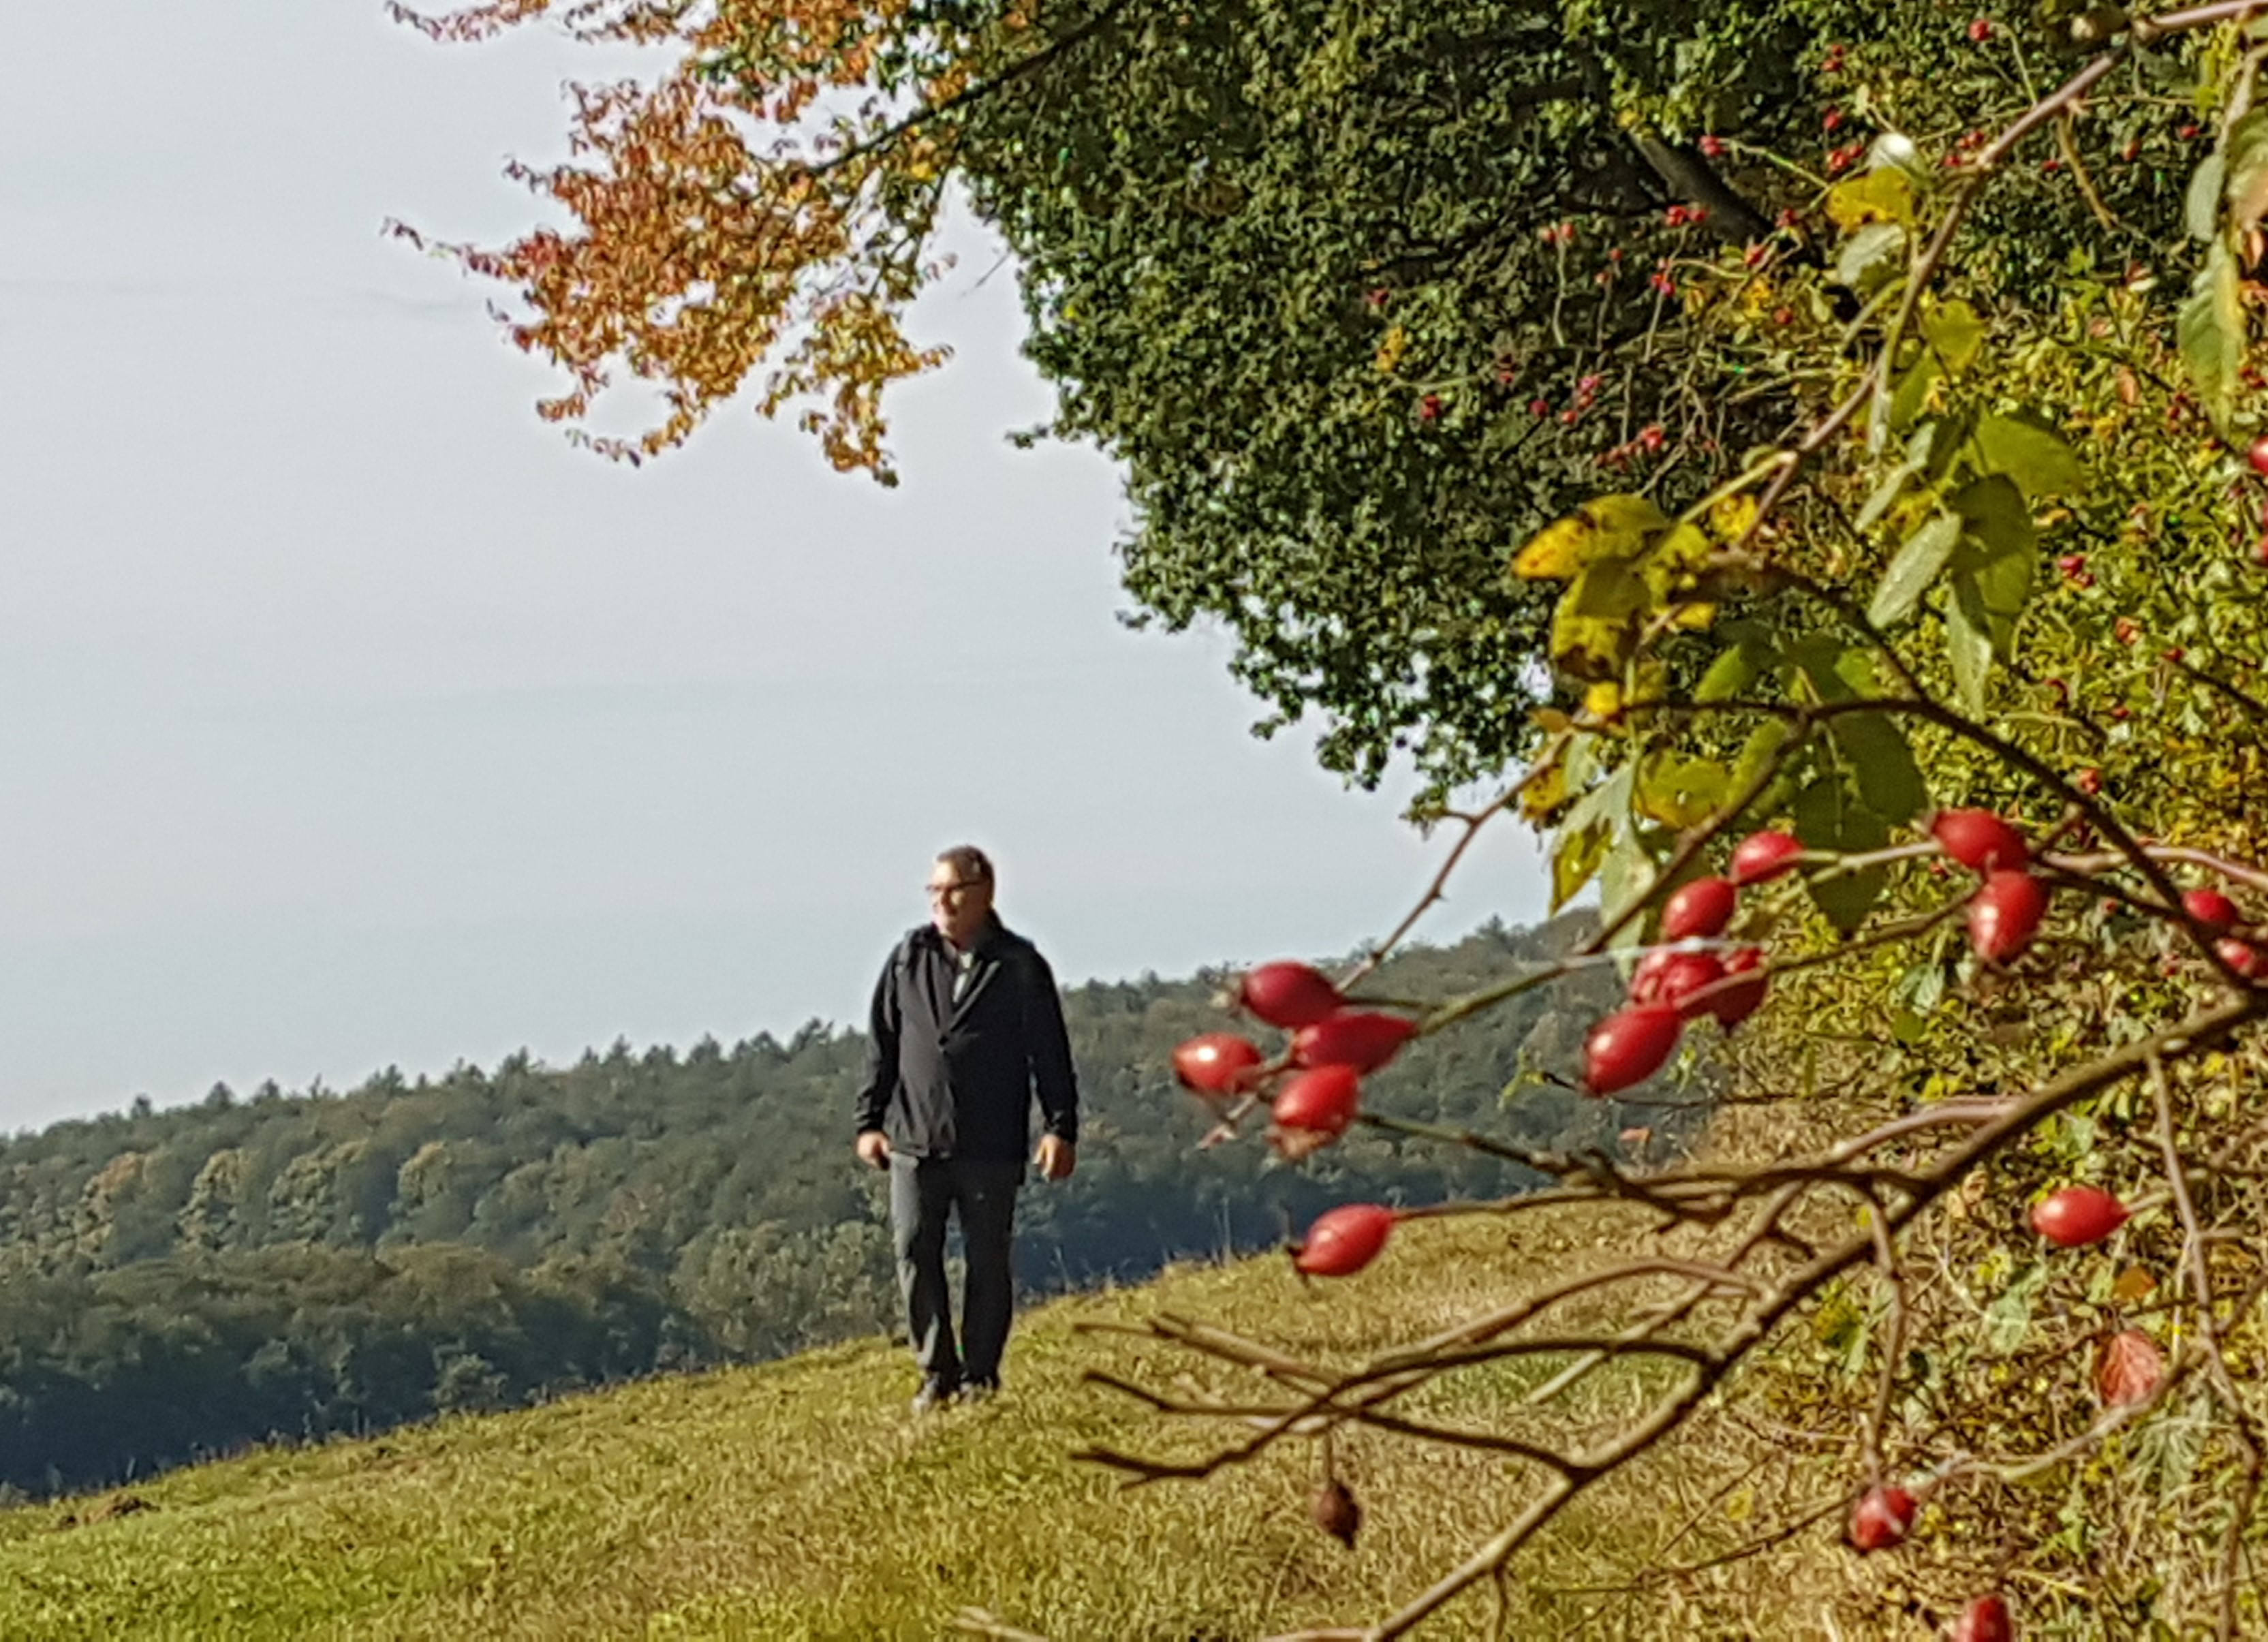 Wandern am Waldrand im Herbst